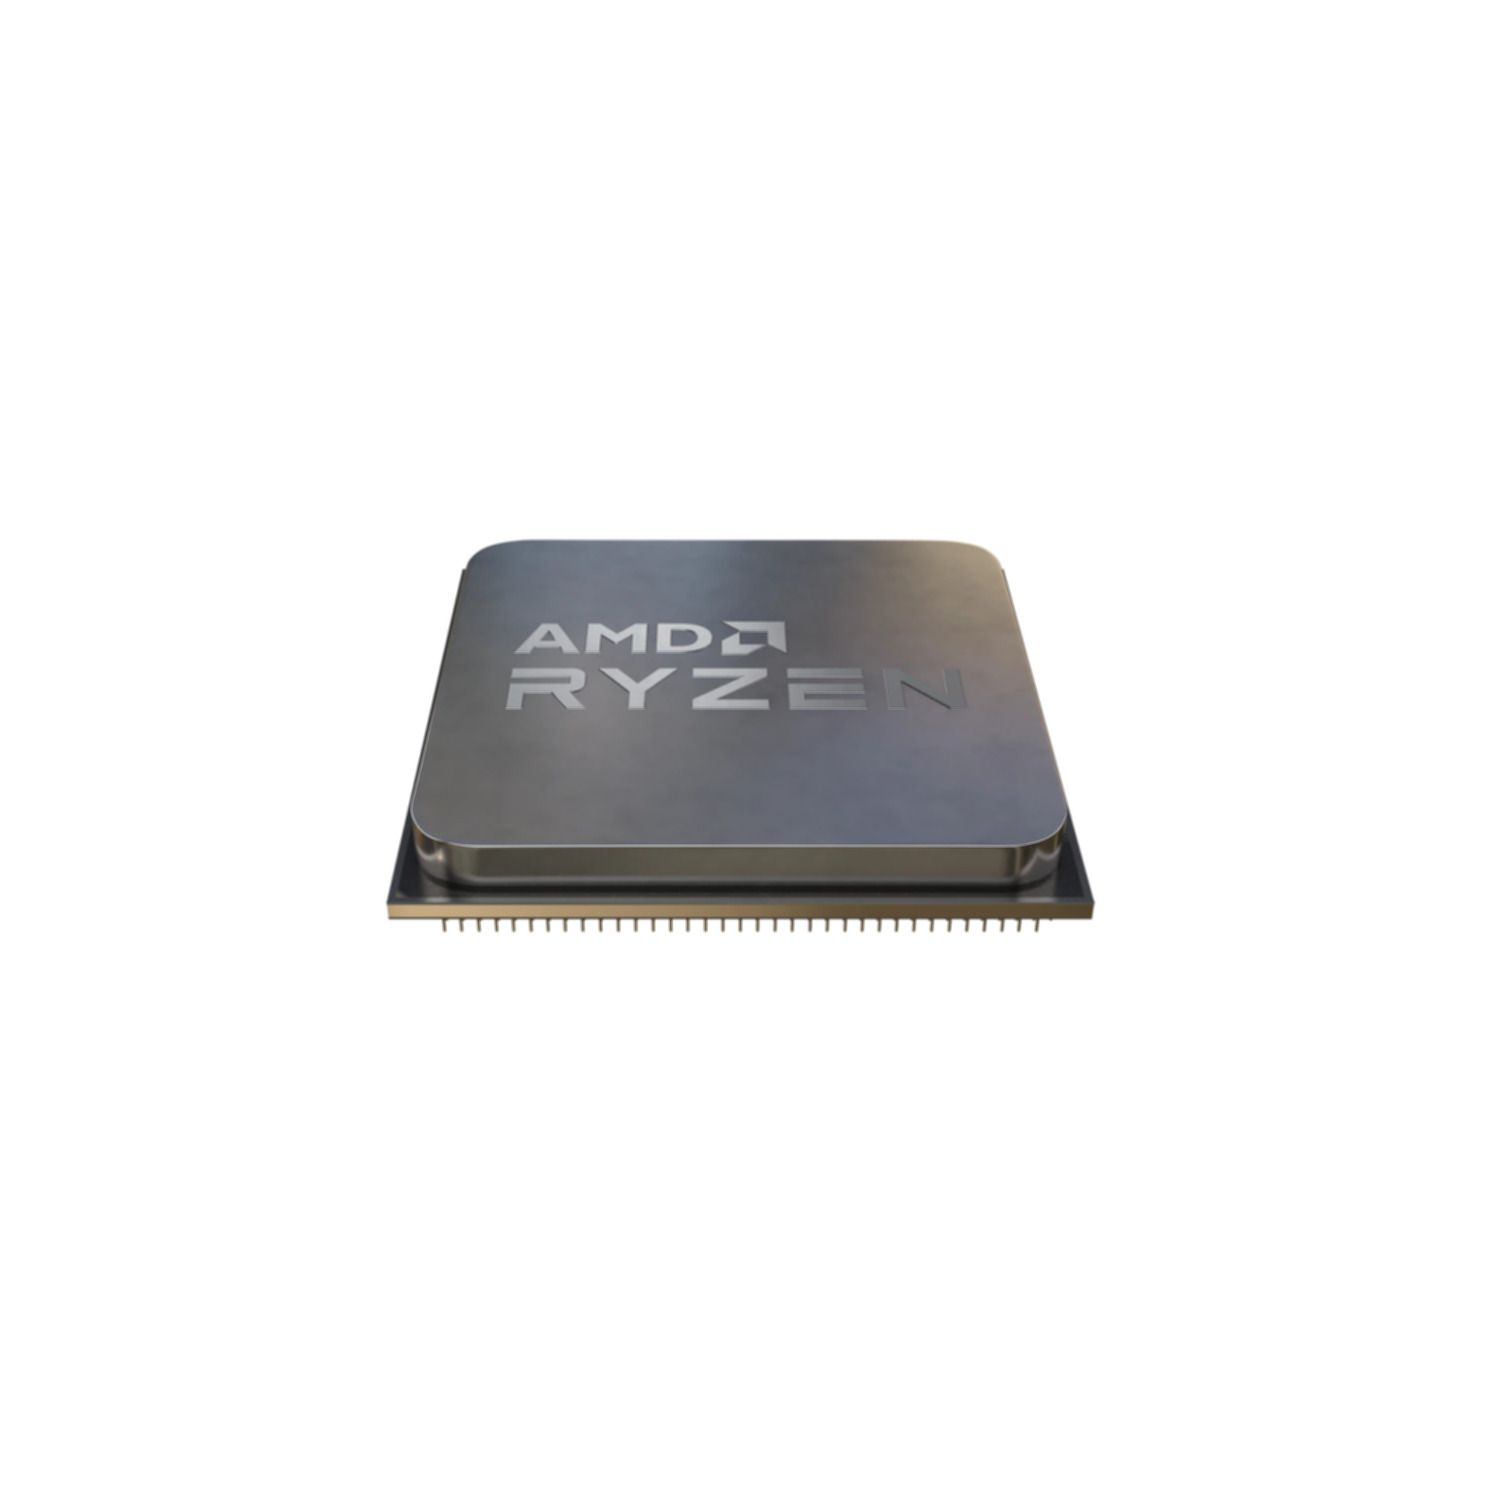 AMD 5500 Prozessor mit Boxed-Kühler, Mehrfarbig